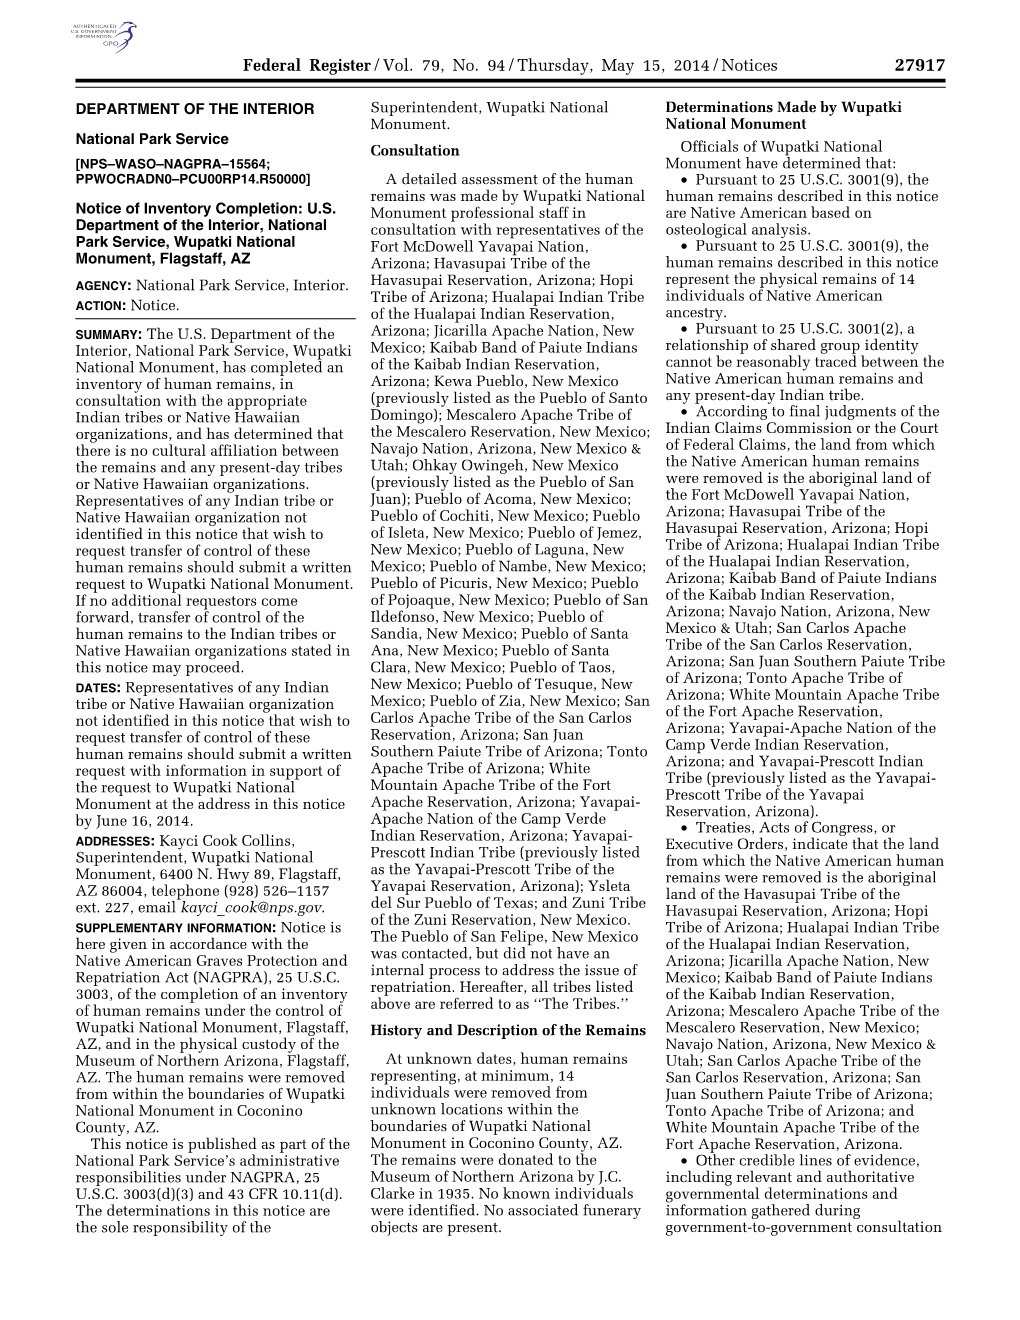 Federal Register/Vol. 79, No. 94/Thursday, May 15, 2014/Notices